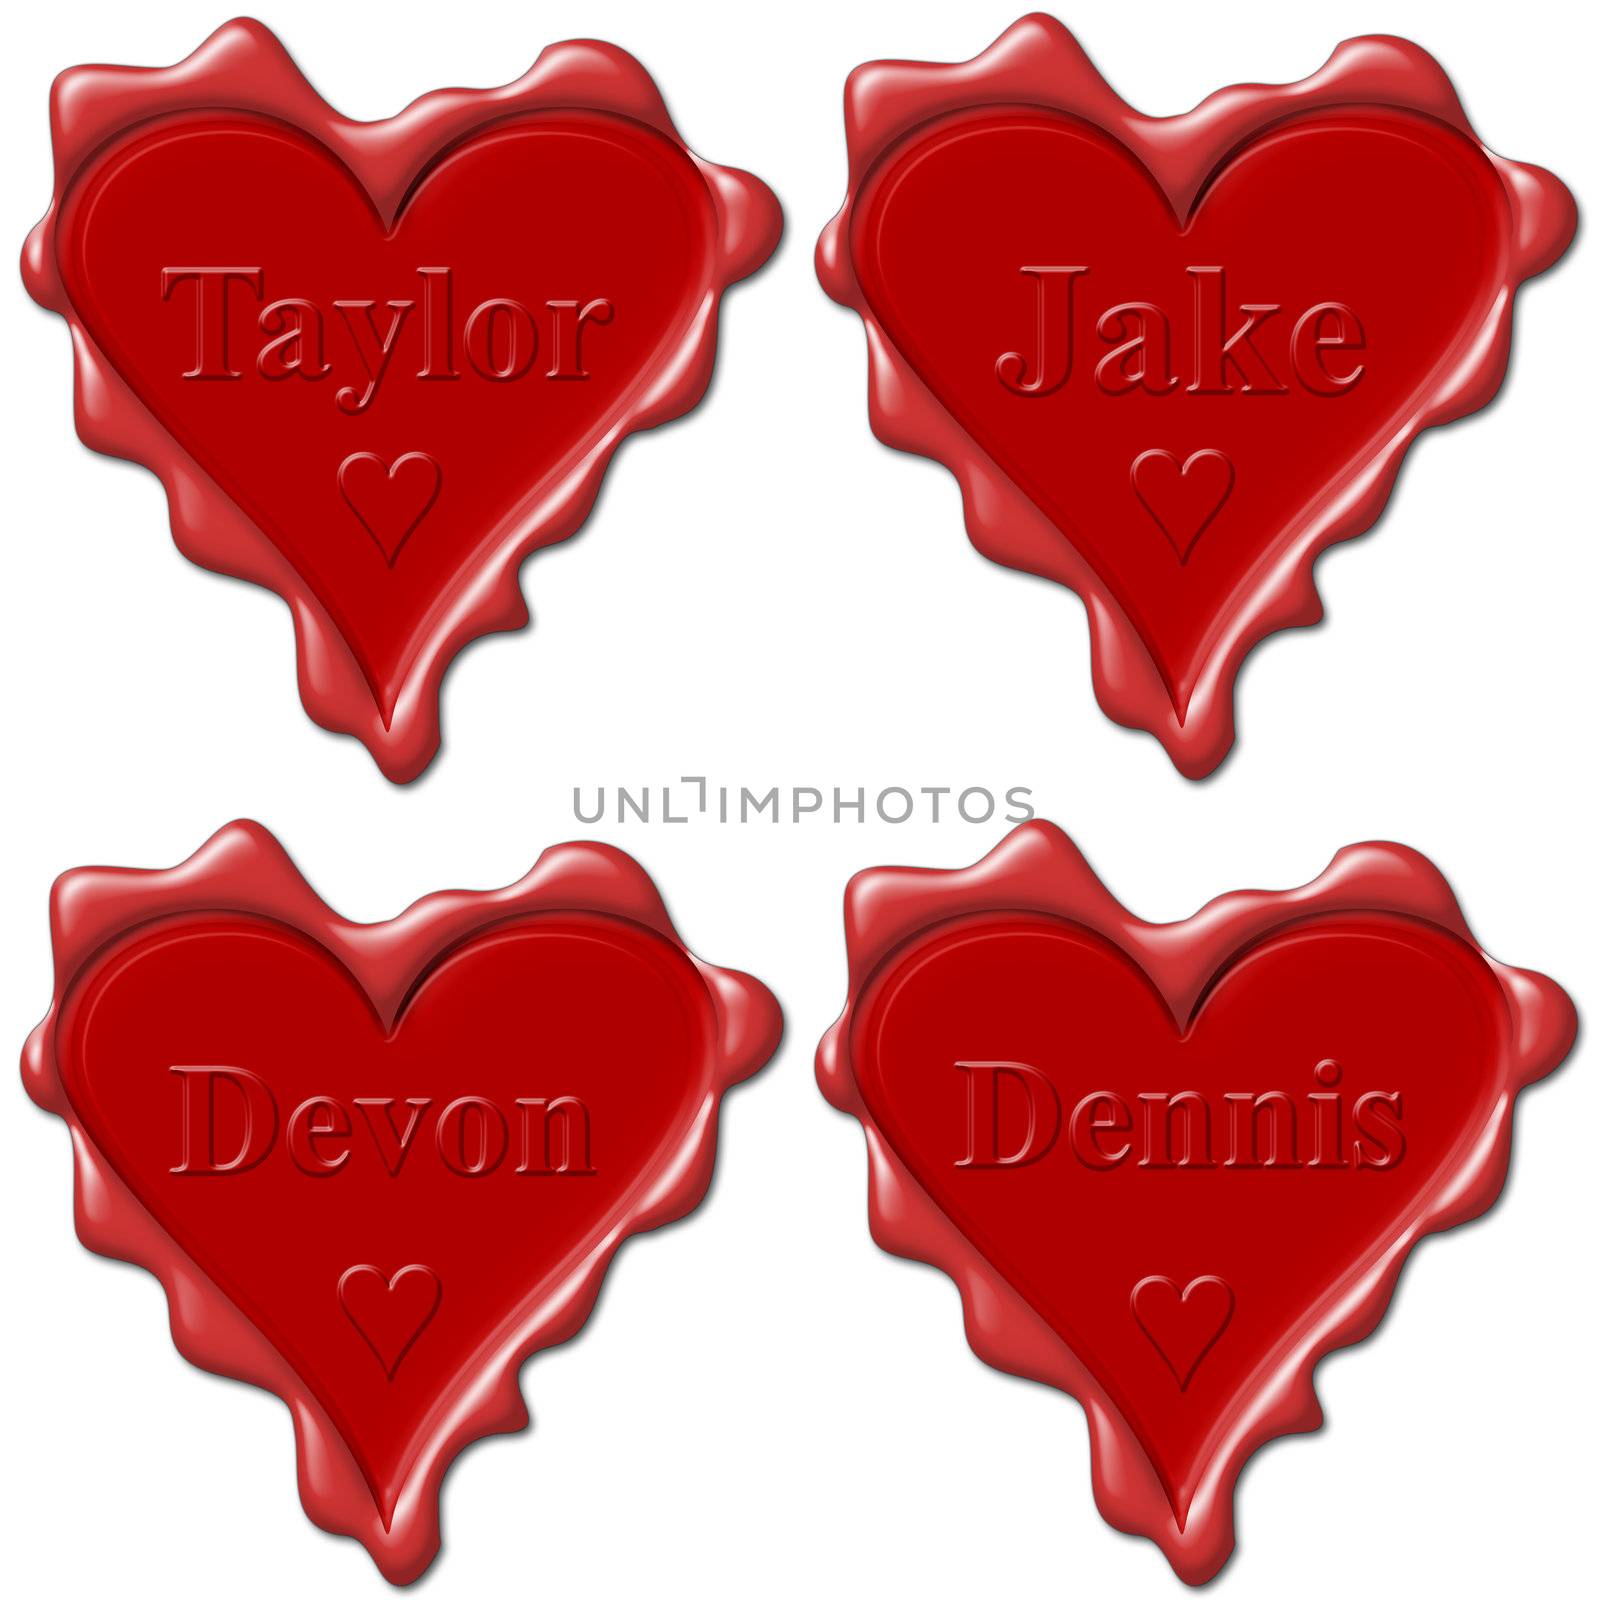 Valentine love hearts with names: Taylor, Jake, Devon, Dennis by mozzyb